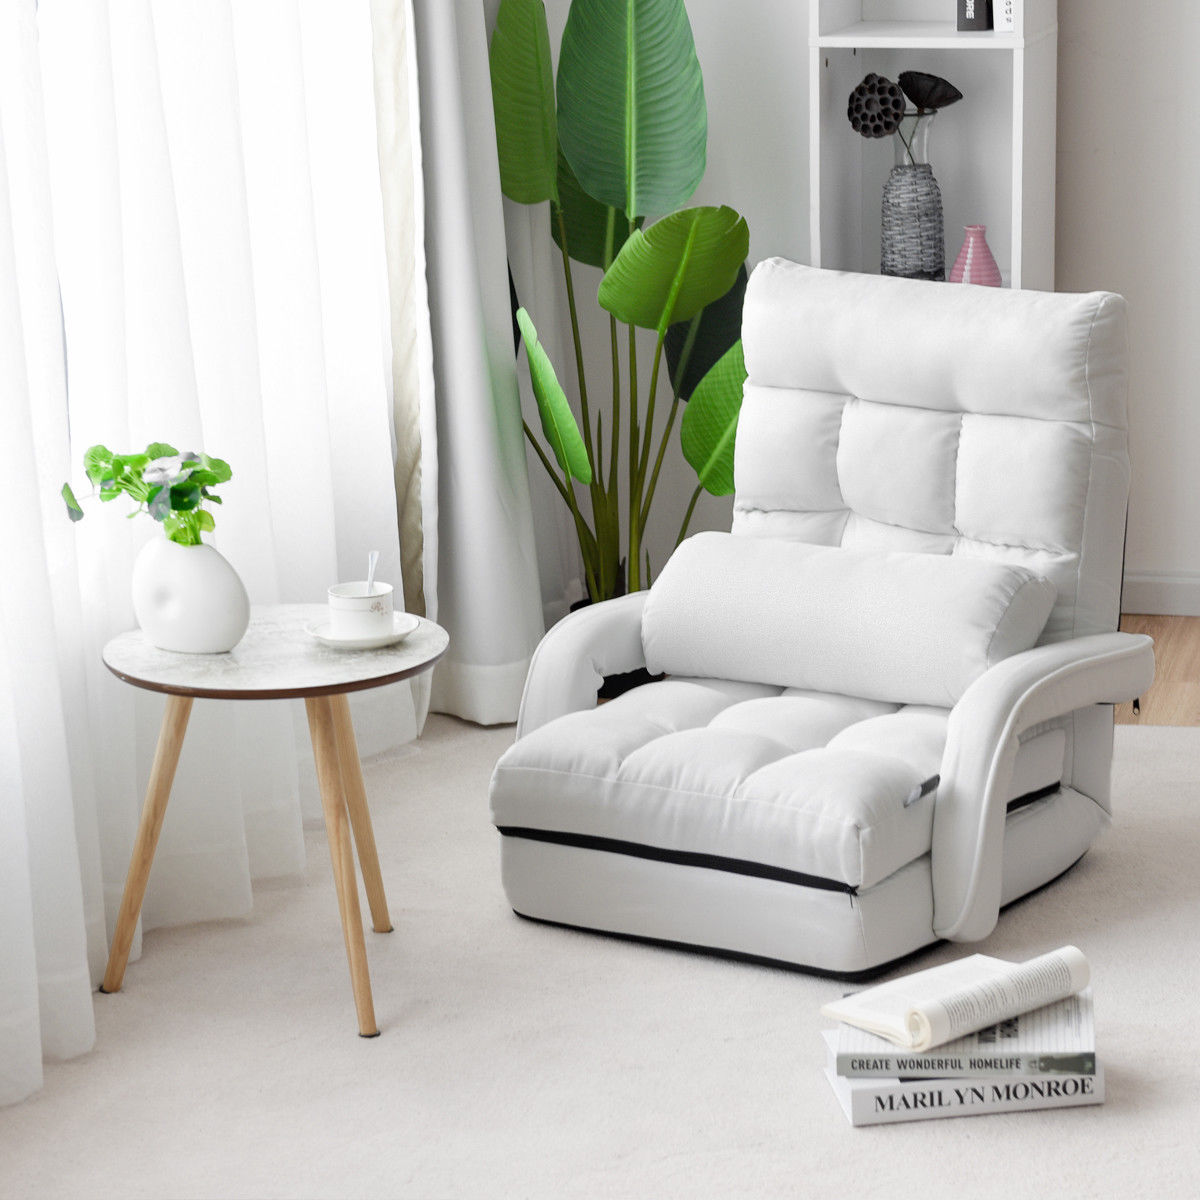 Costway Folding Lazy Sofa Lounger Bed Floor Chair $99.99 (REG $199.99)